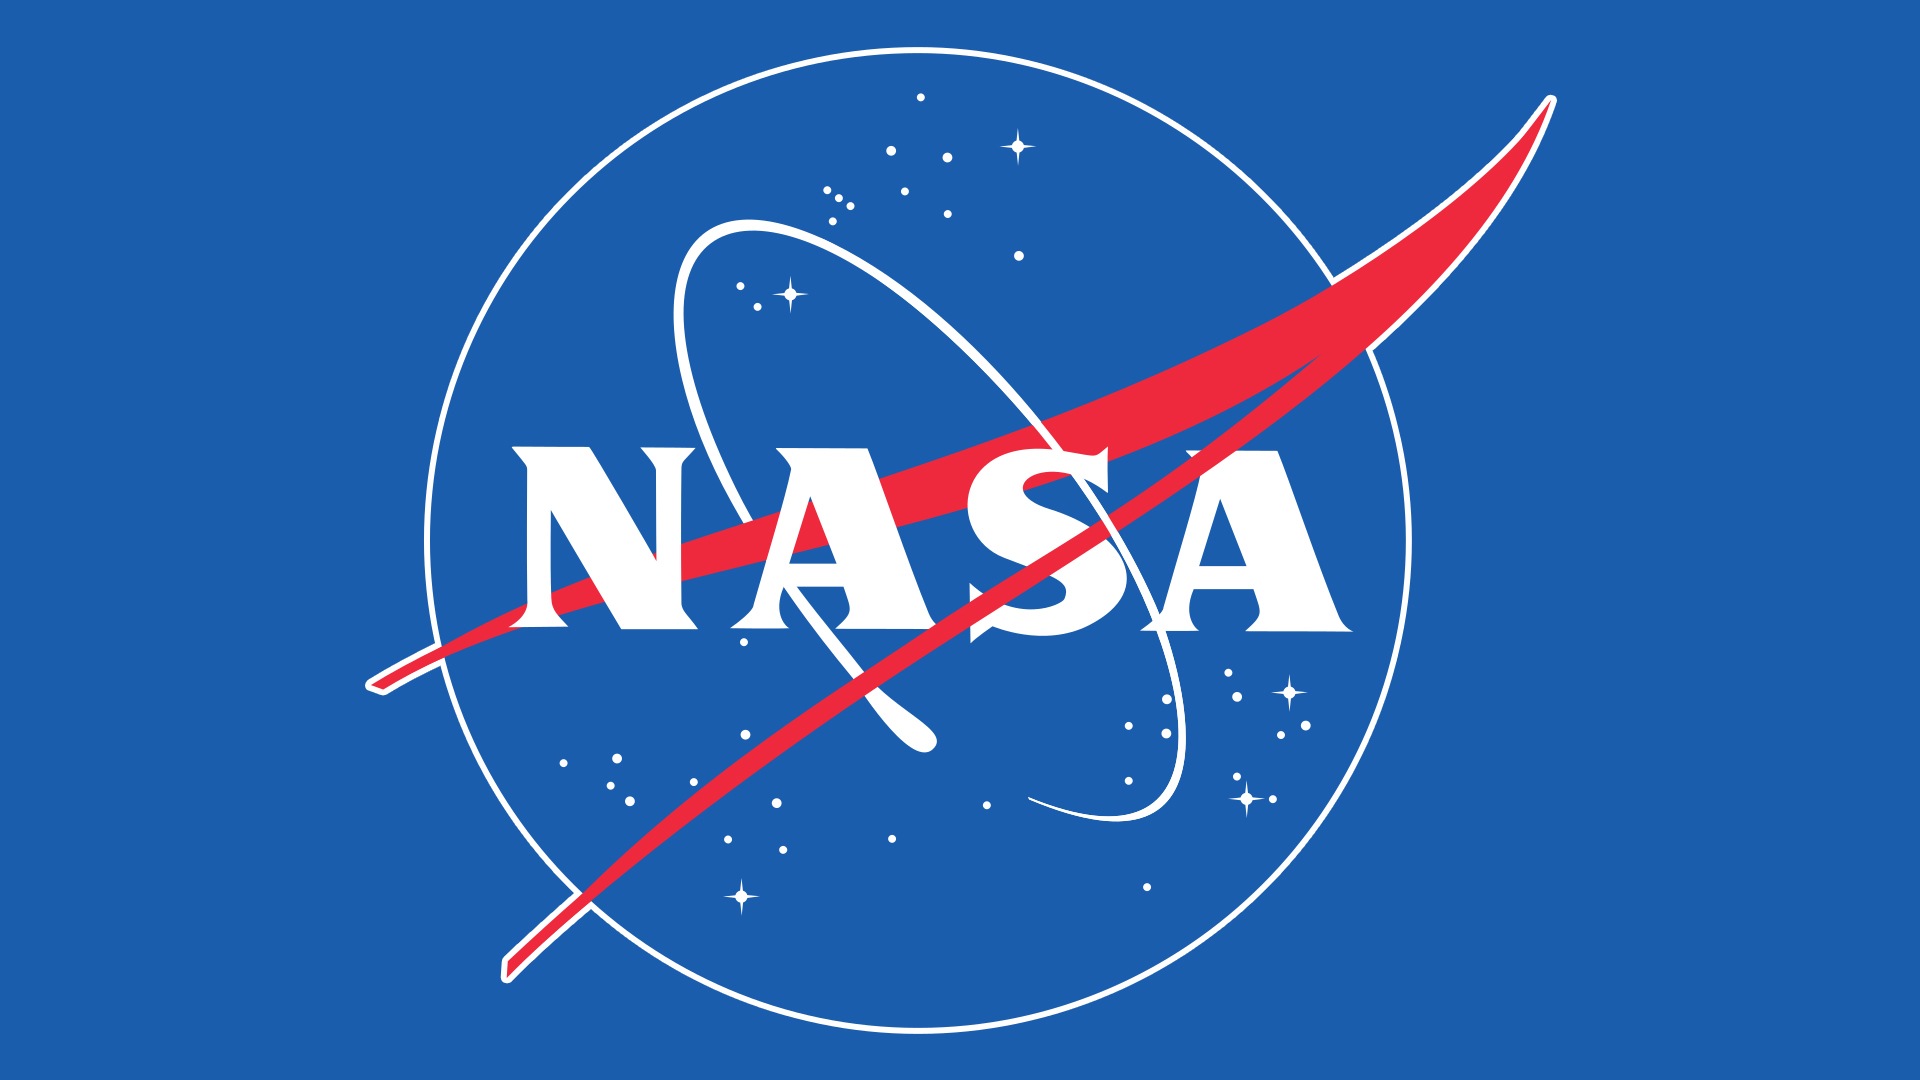 NASA logo : histoire, signification et évolution, symbole